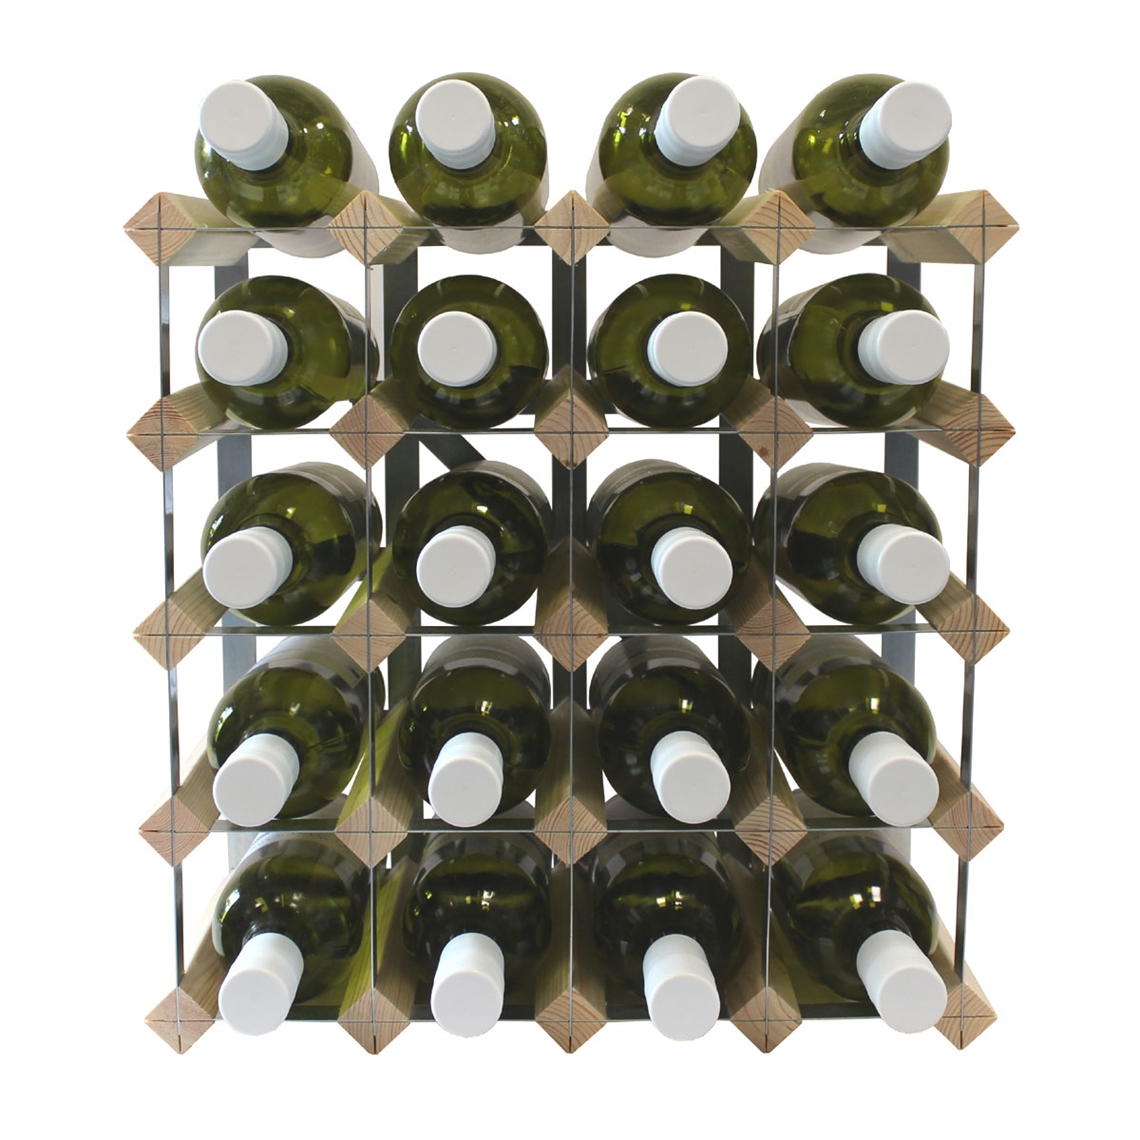 View more bespoke oak wine racks from our Assembled Wine Racks range